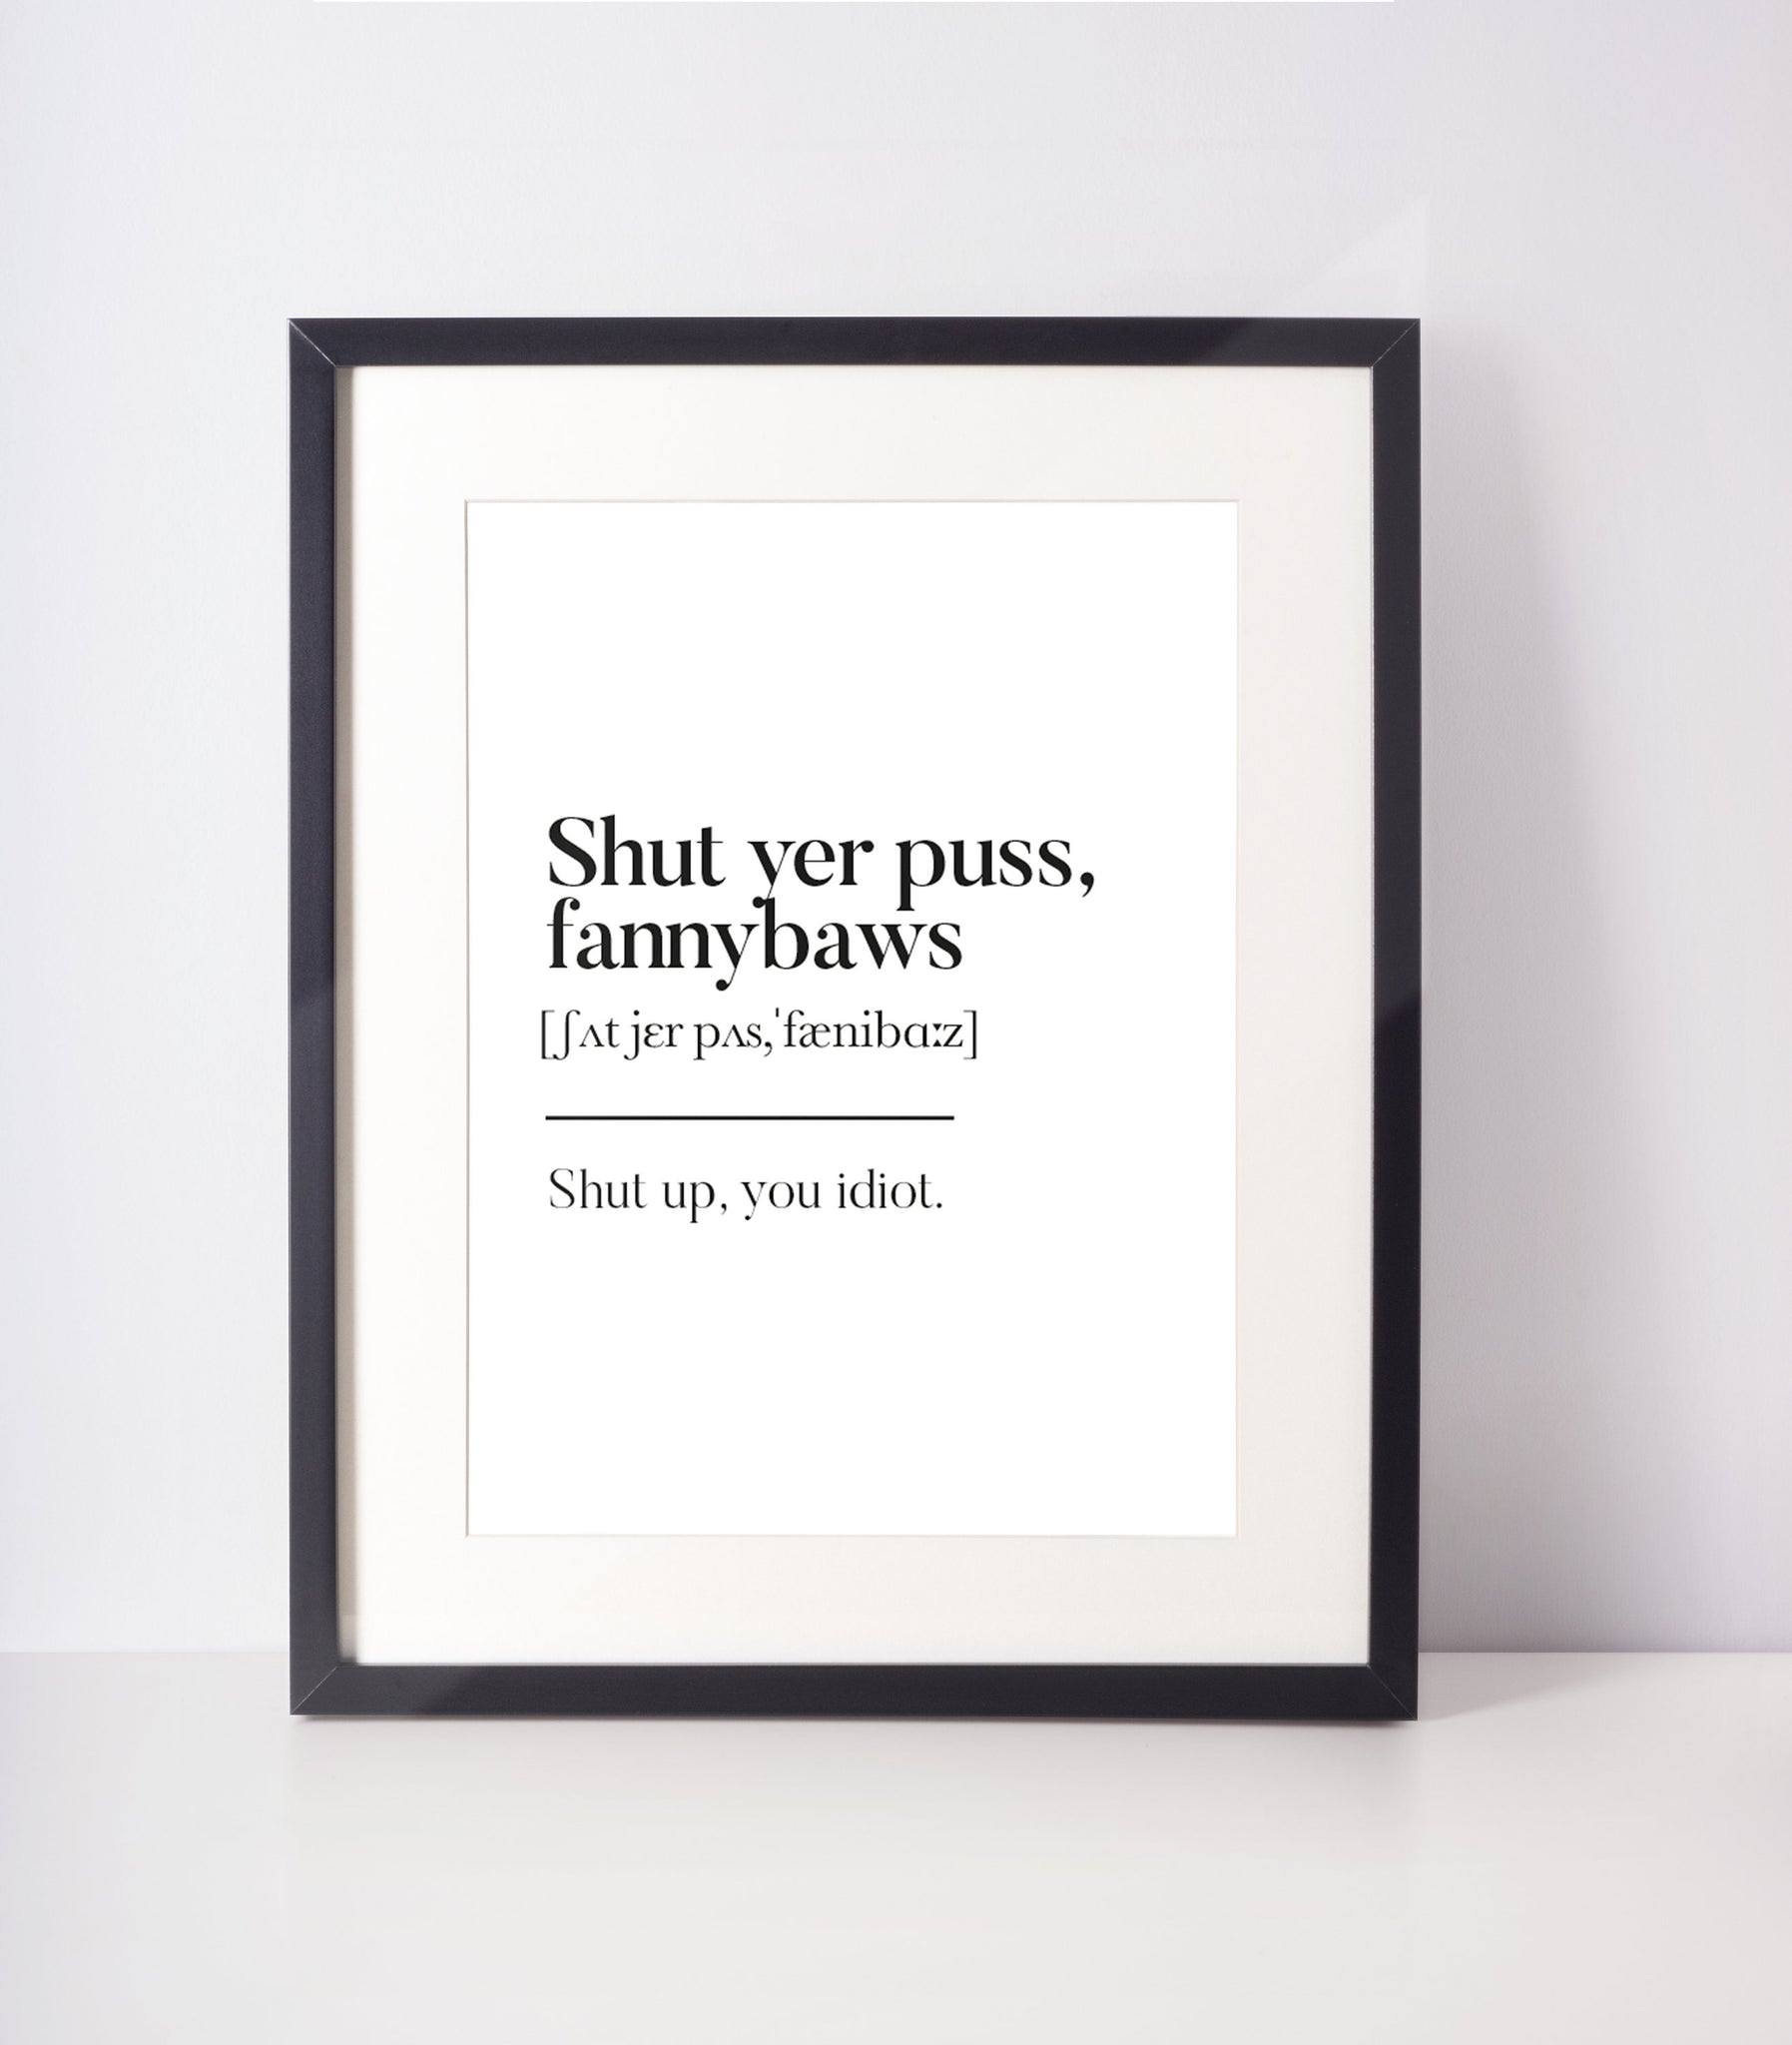 Shut yer puss fannybaws Scottish Slang Definition Unframed Print